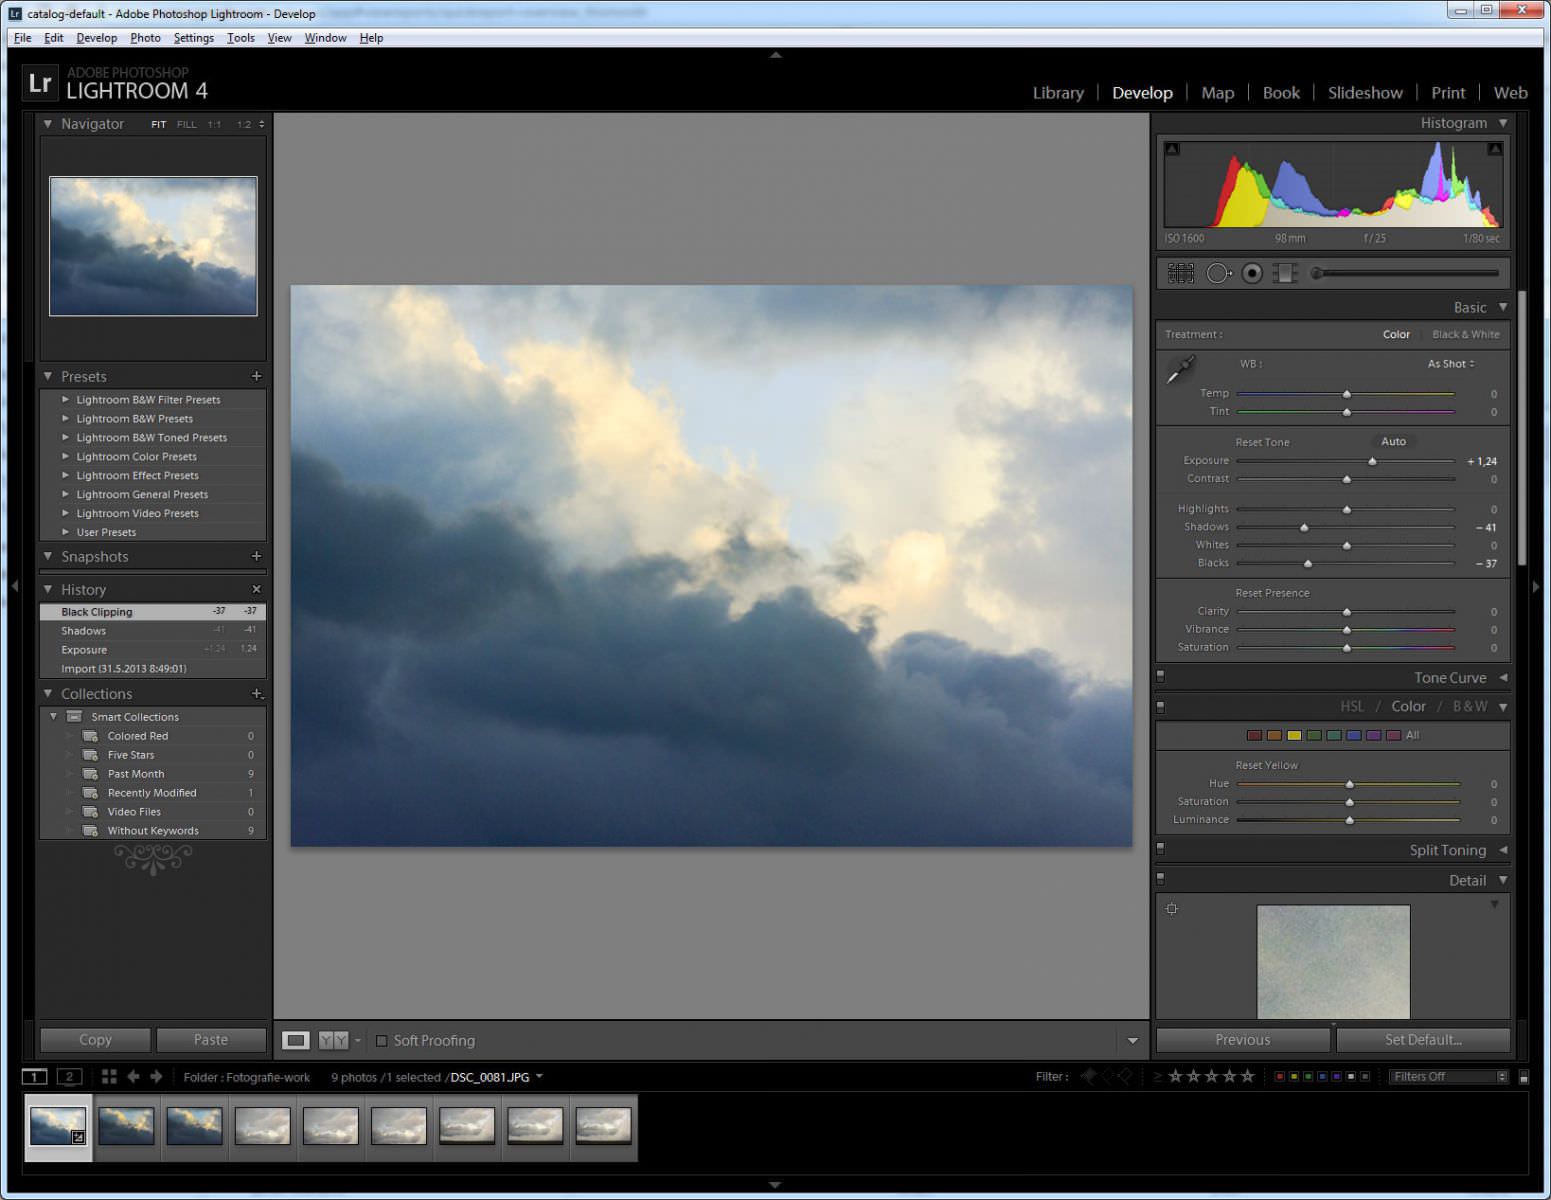 Adobe Photoshop Lightroom 4 software screenshot